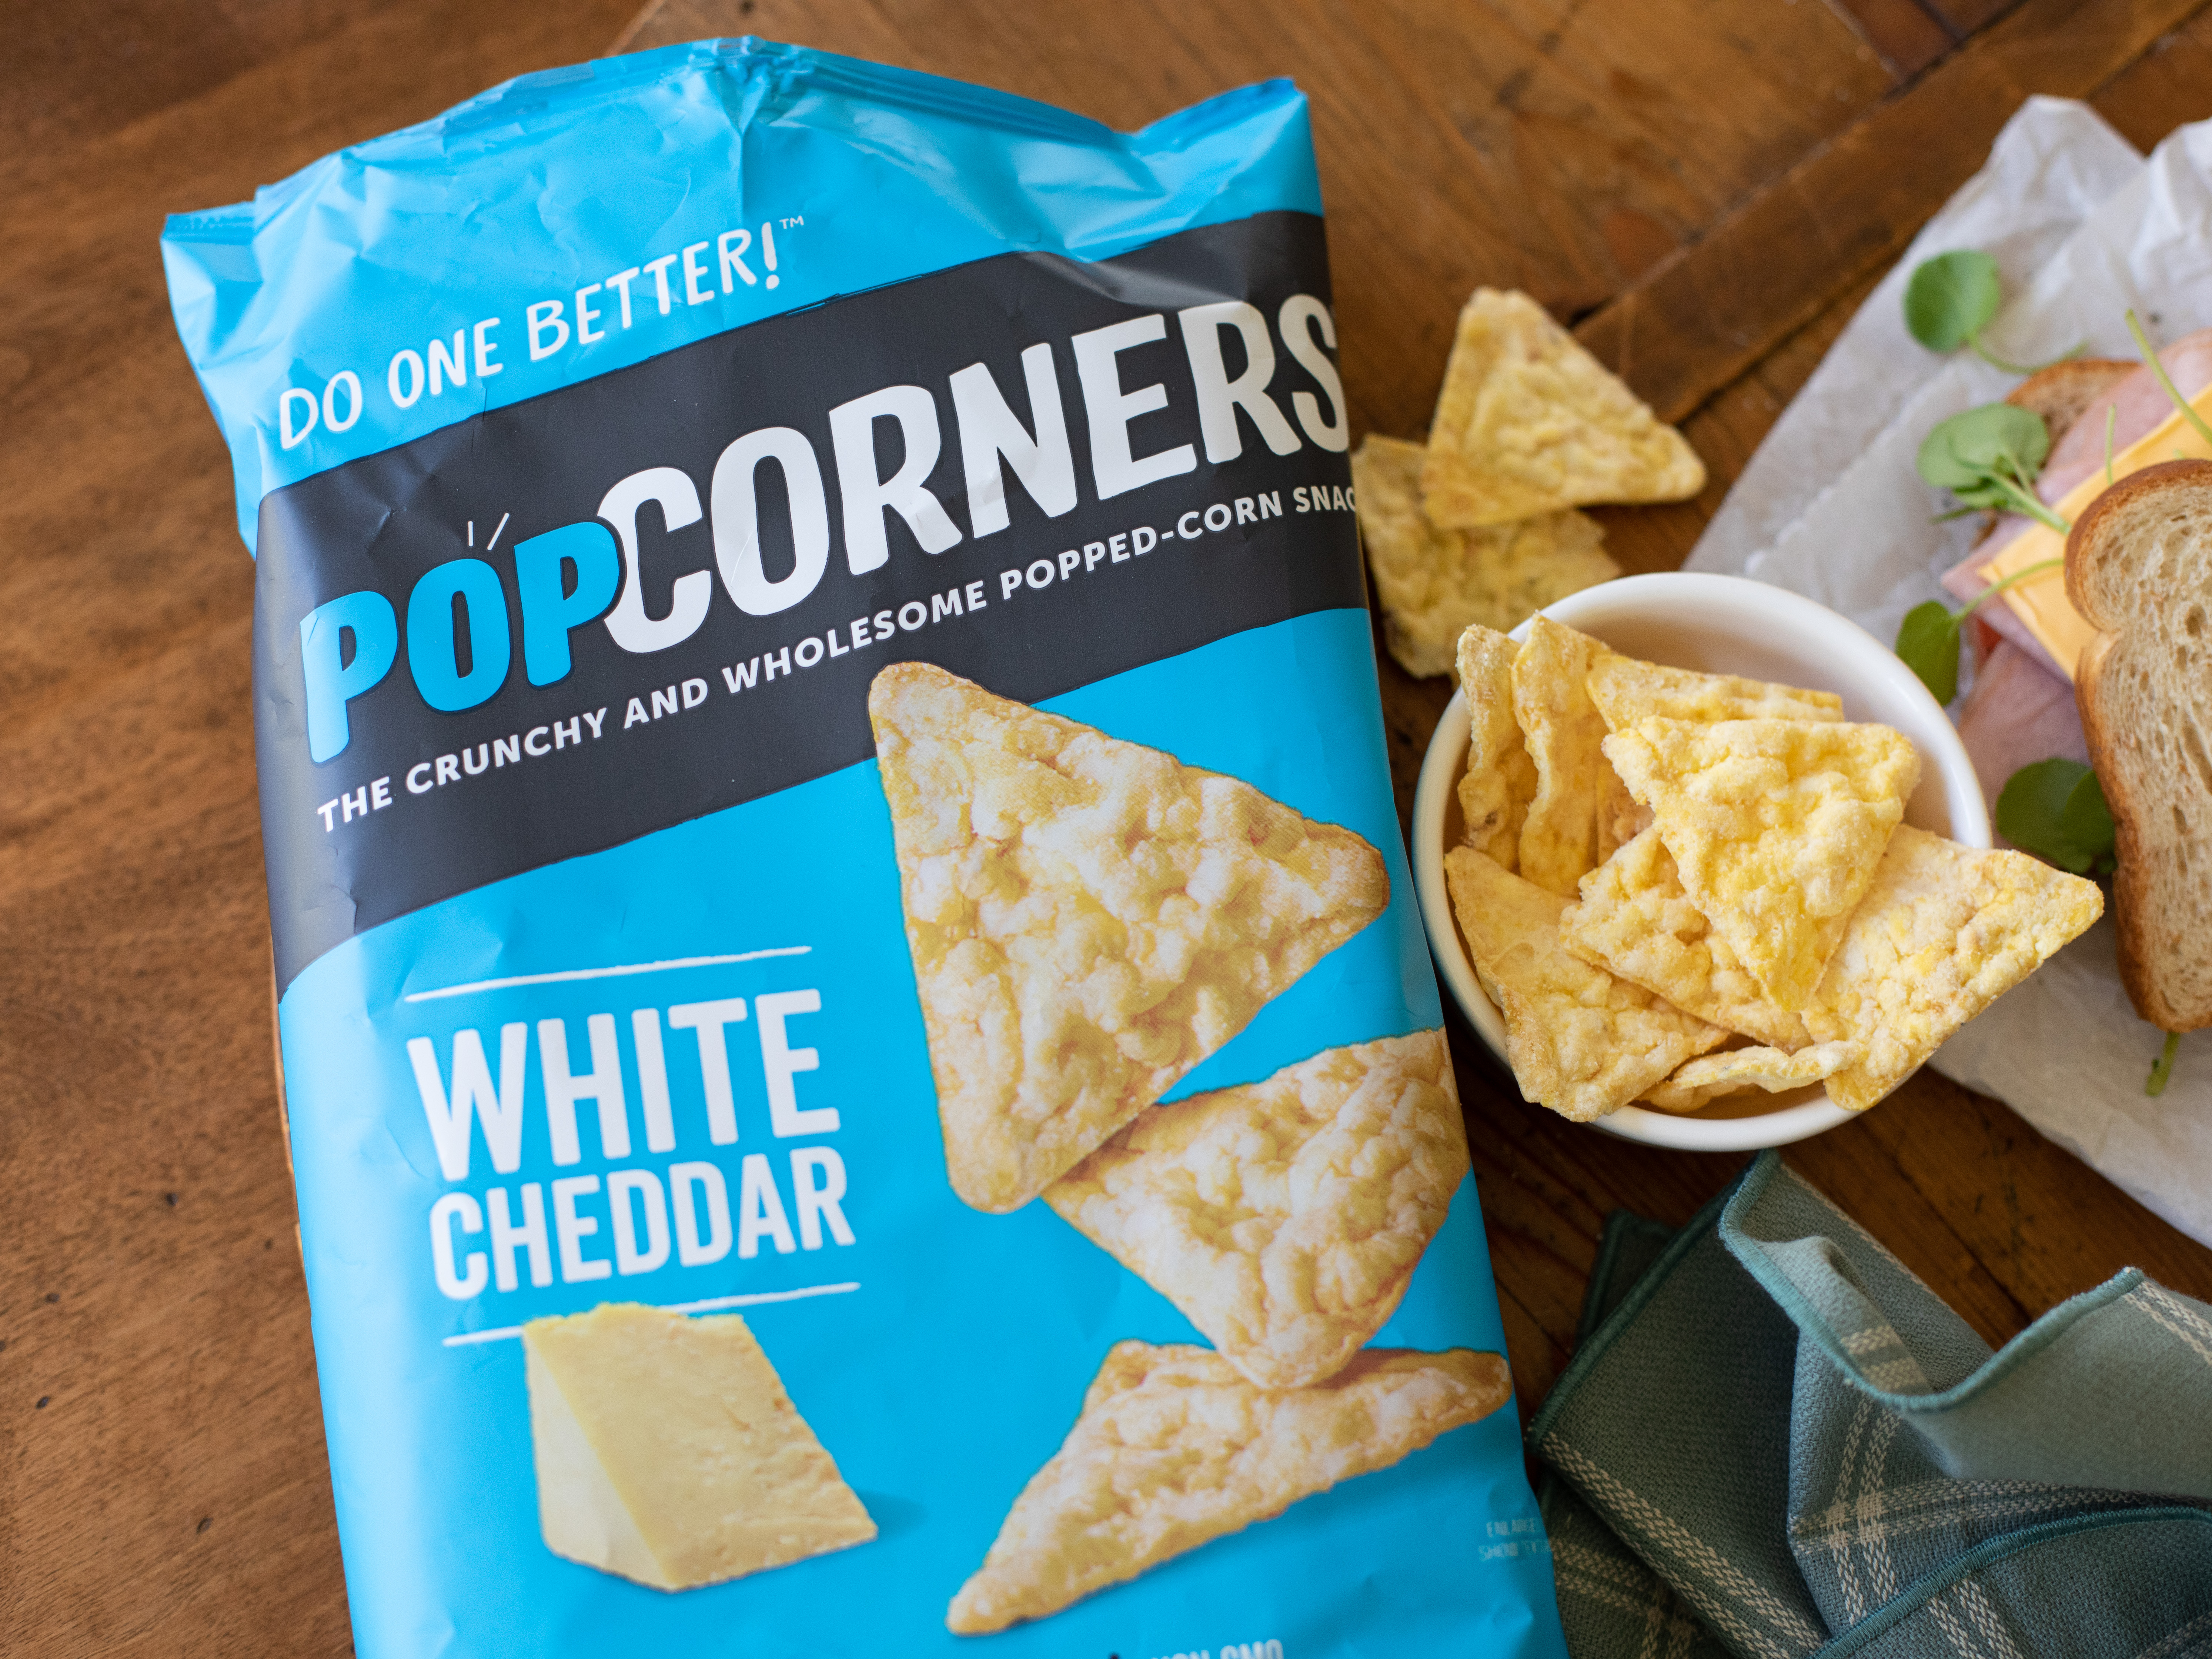 PopCorners Popped-Corn Snack Just $2 Per Bag At Publix (Regular Price $4.99)